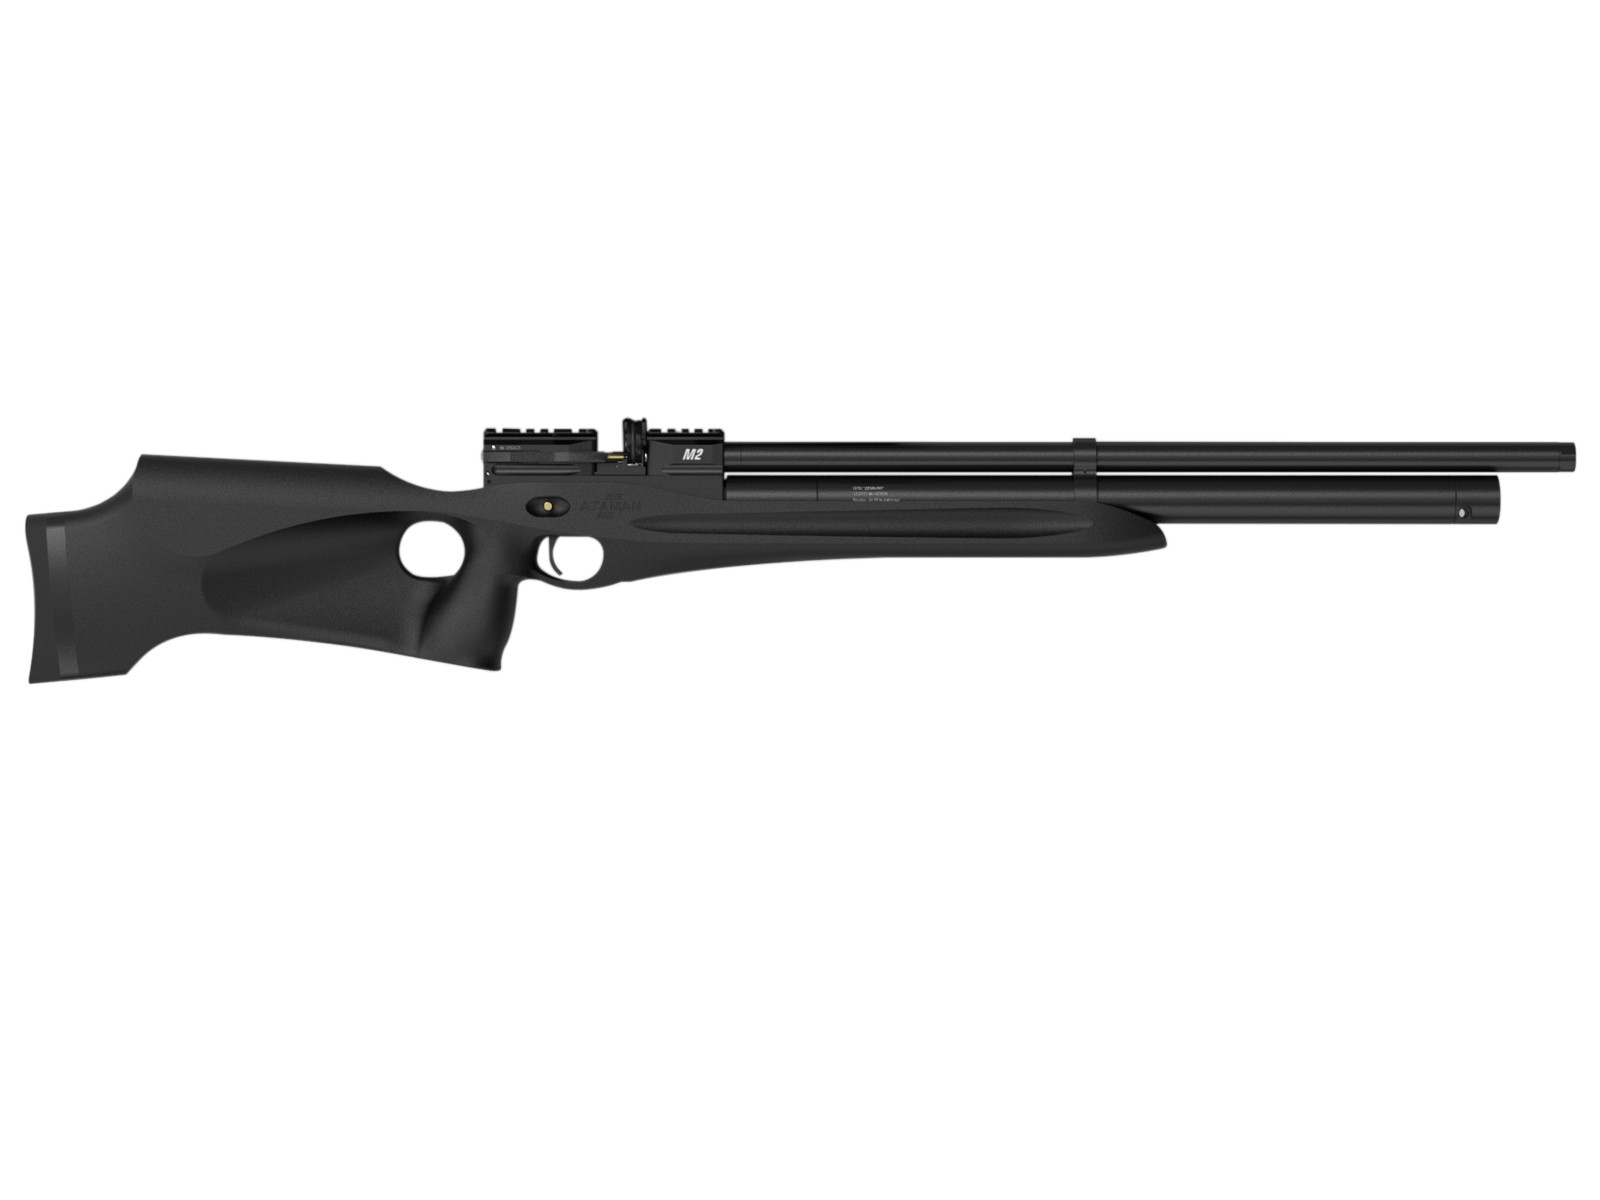 Number #5 Top 10 Best Long Range Pellet Guns - Ataman M2 Carbine